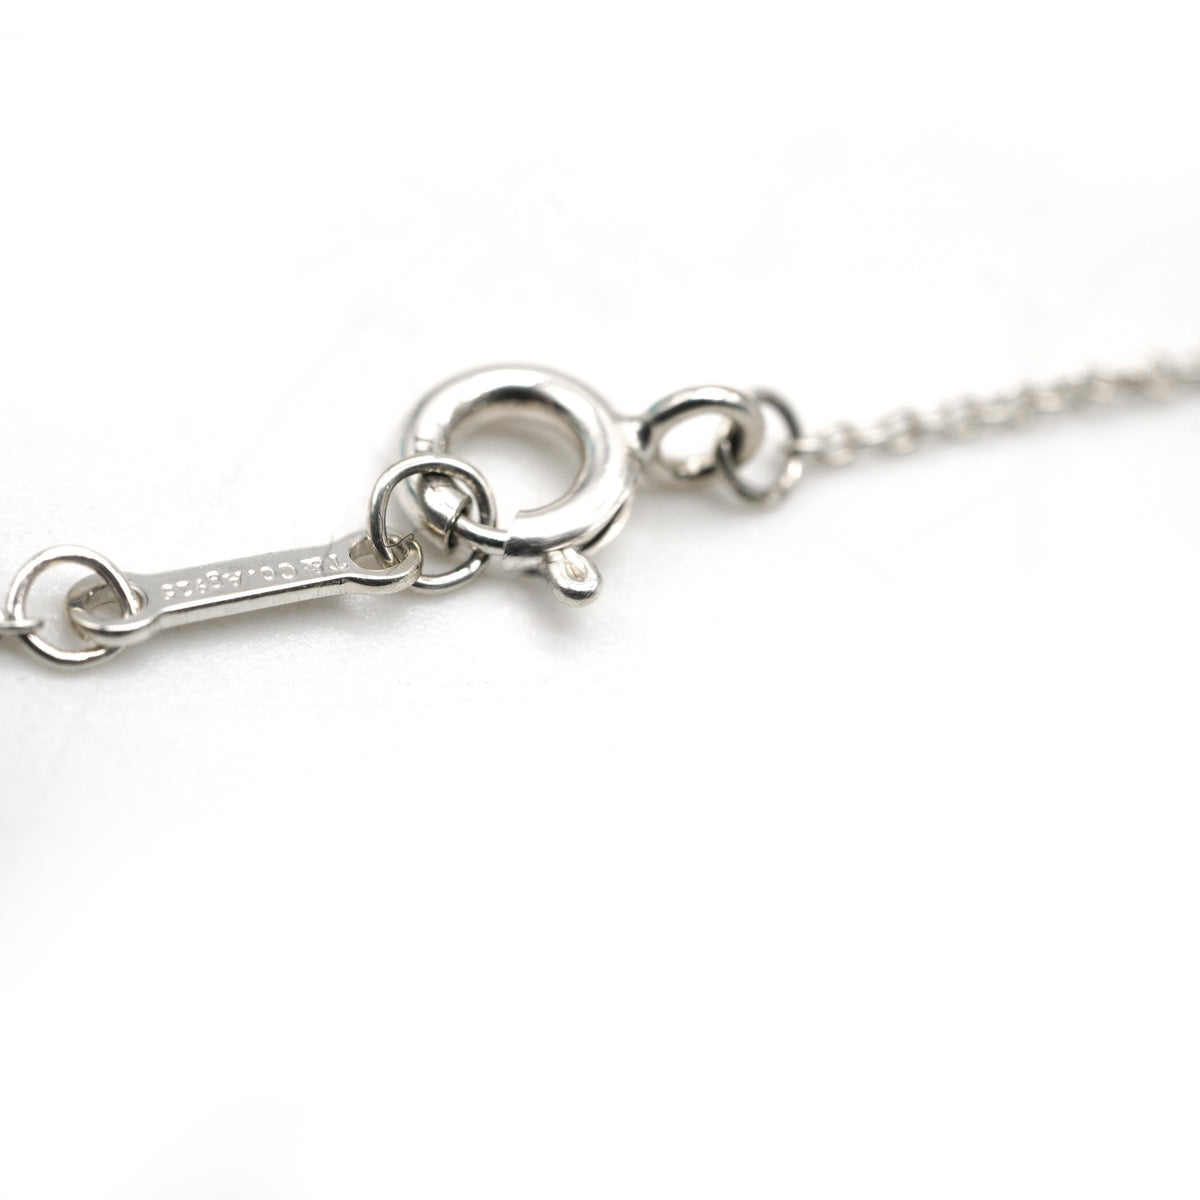 Elsa Peretti Open Heart Pendant Necklace in Sterling Silver